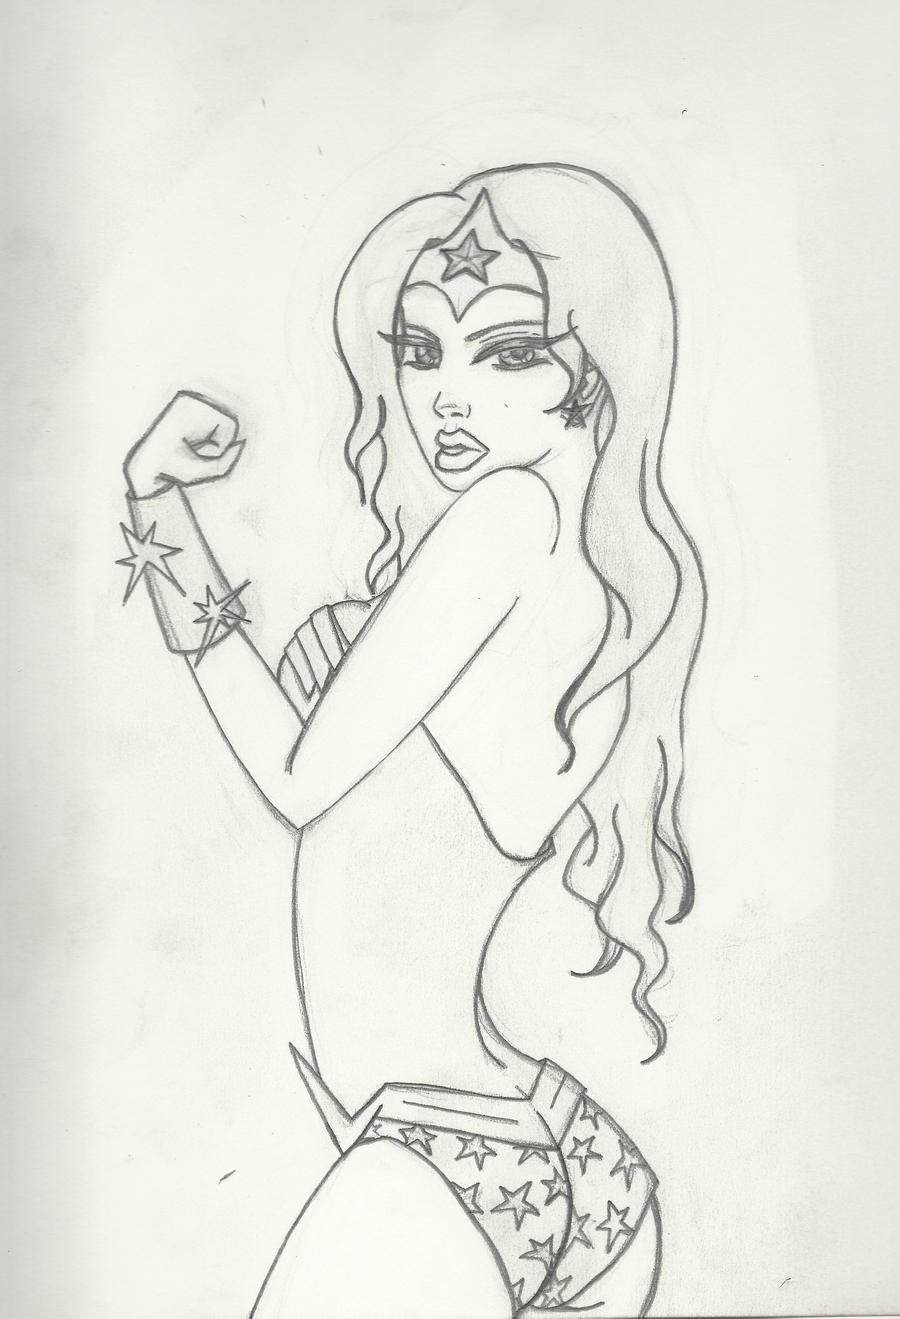 Animeish Wonder Woman Sketch